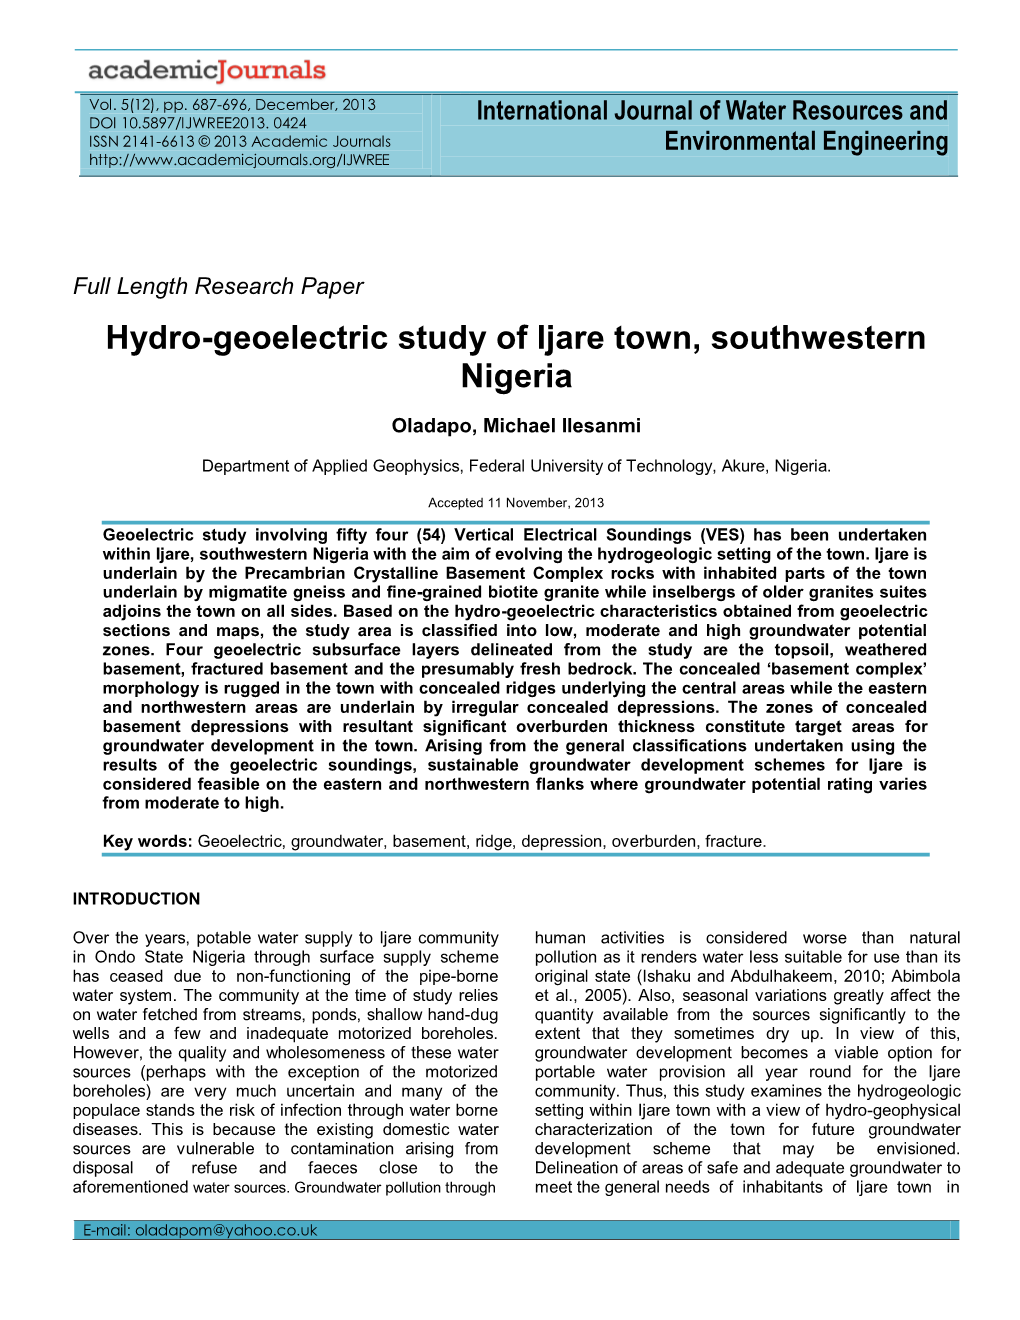 Hydro-Geoelectric Study of Ijare Town, Southwestern Nigeria